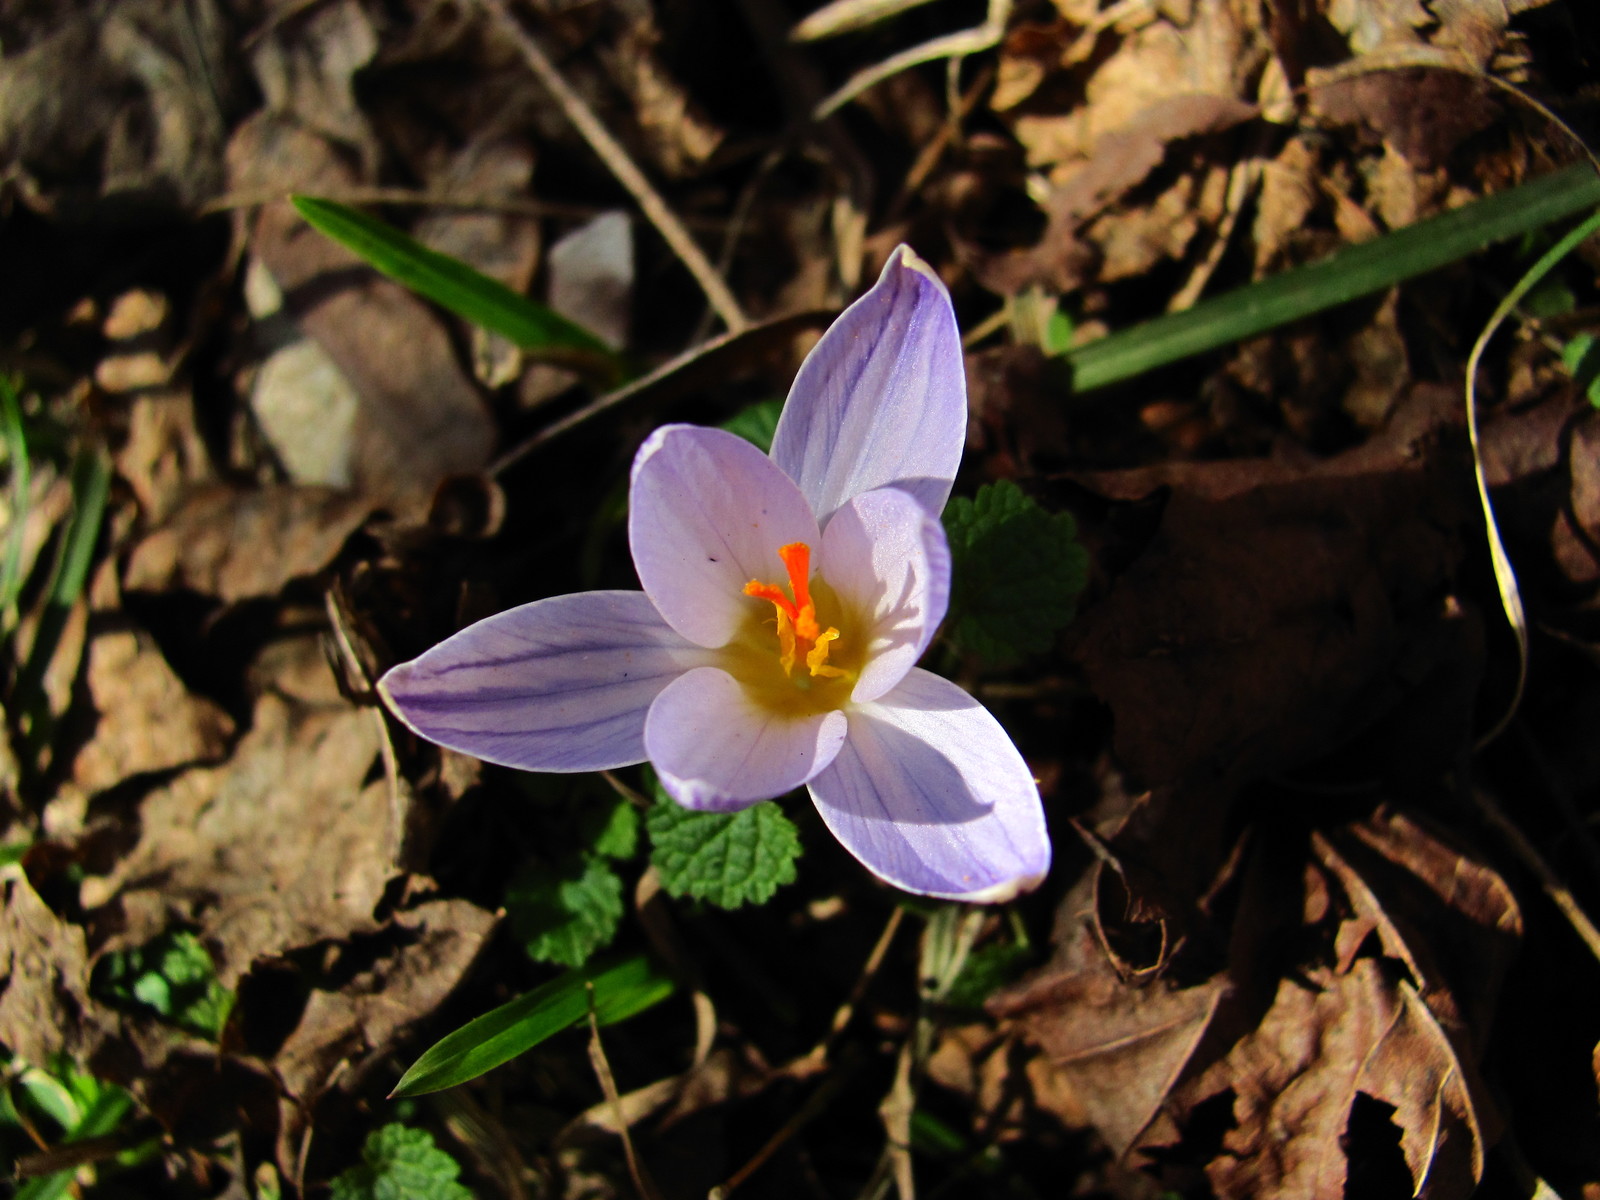 Lilac beauty - Longpost, Freshness, Lilac flowers, Primroses, Spring, My